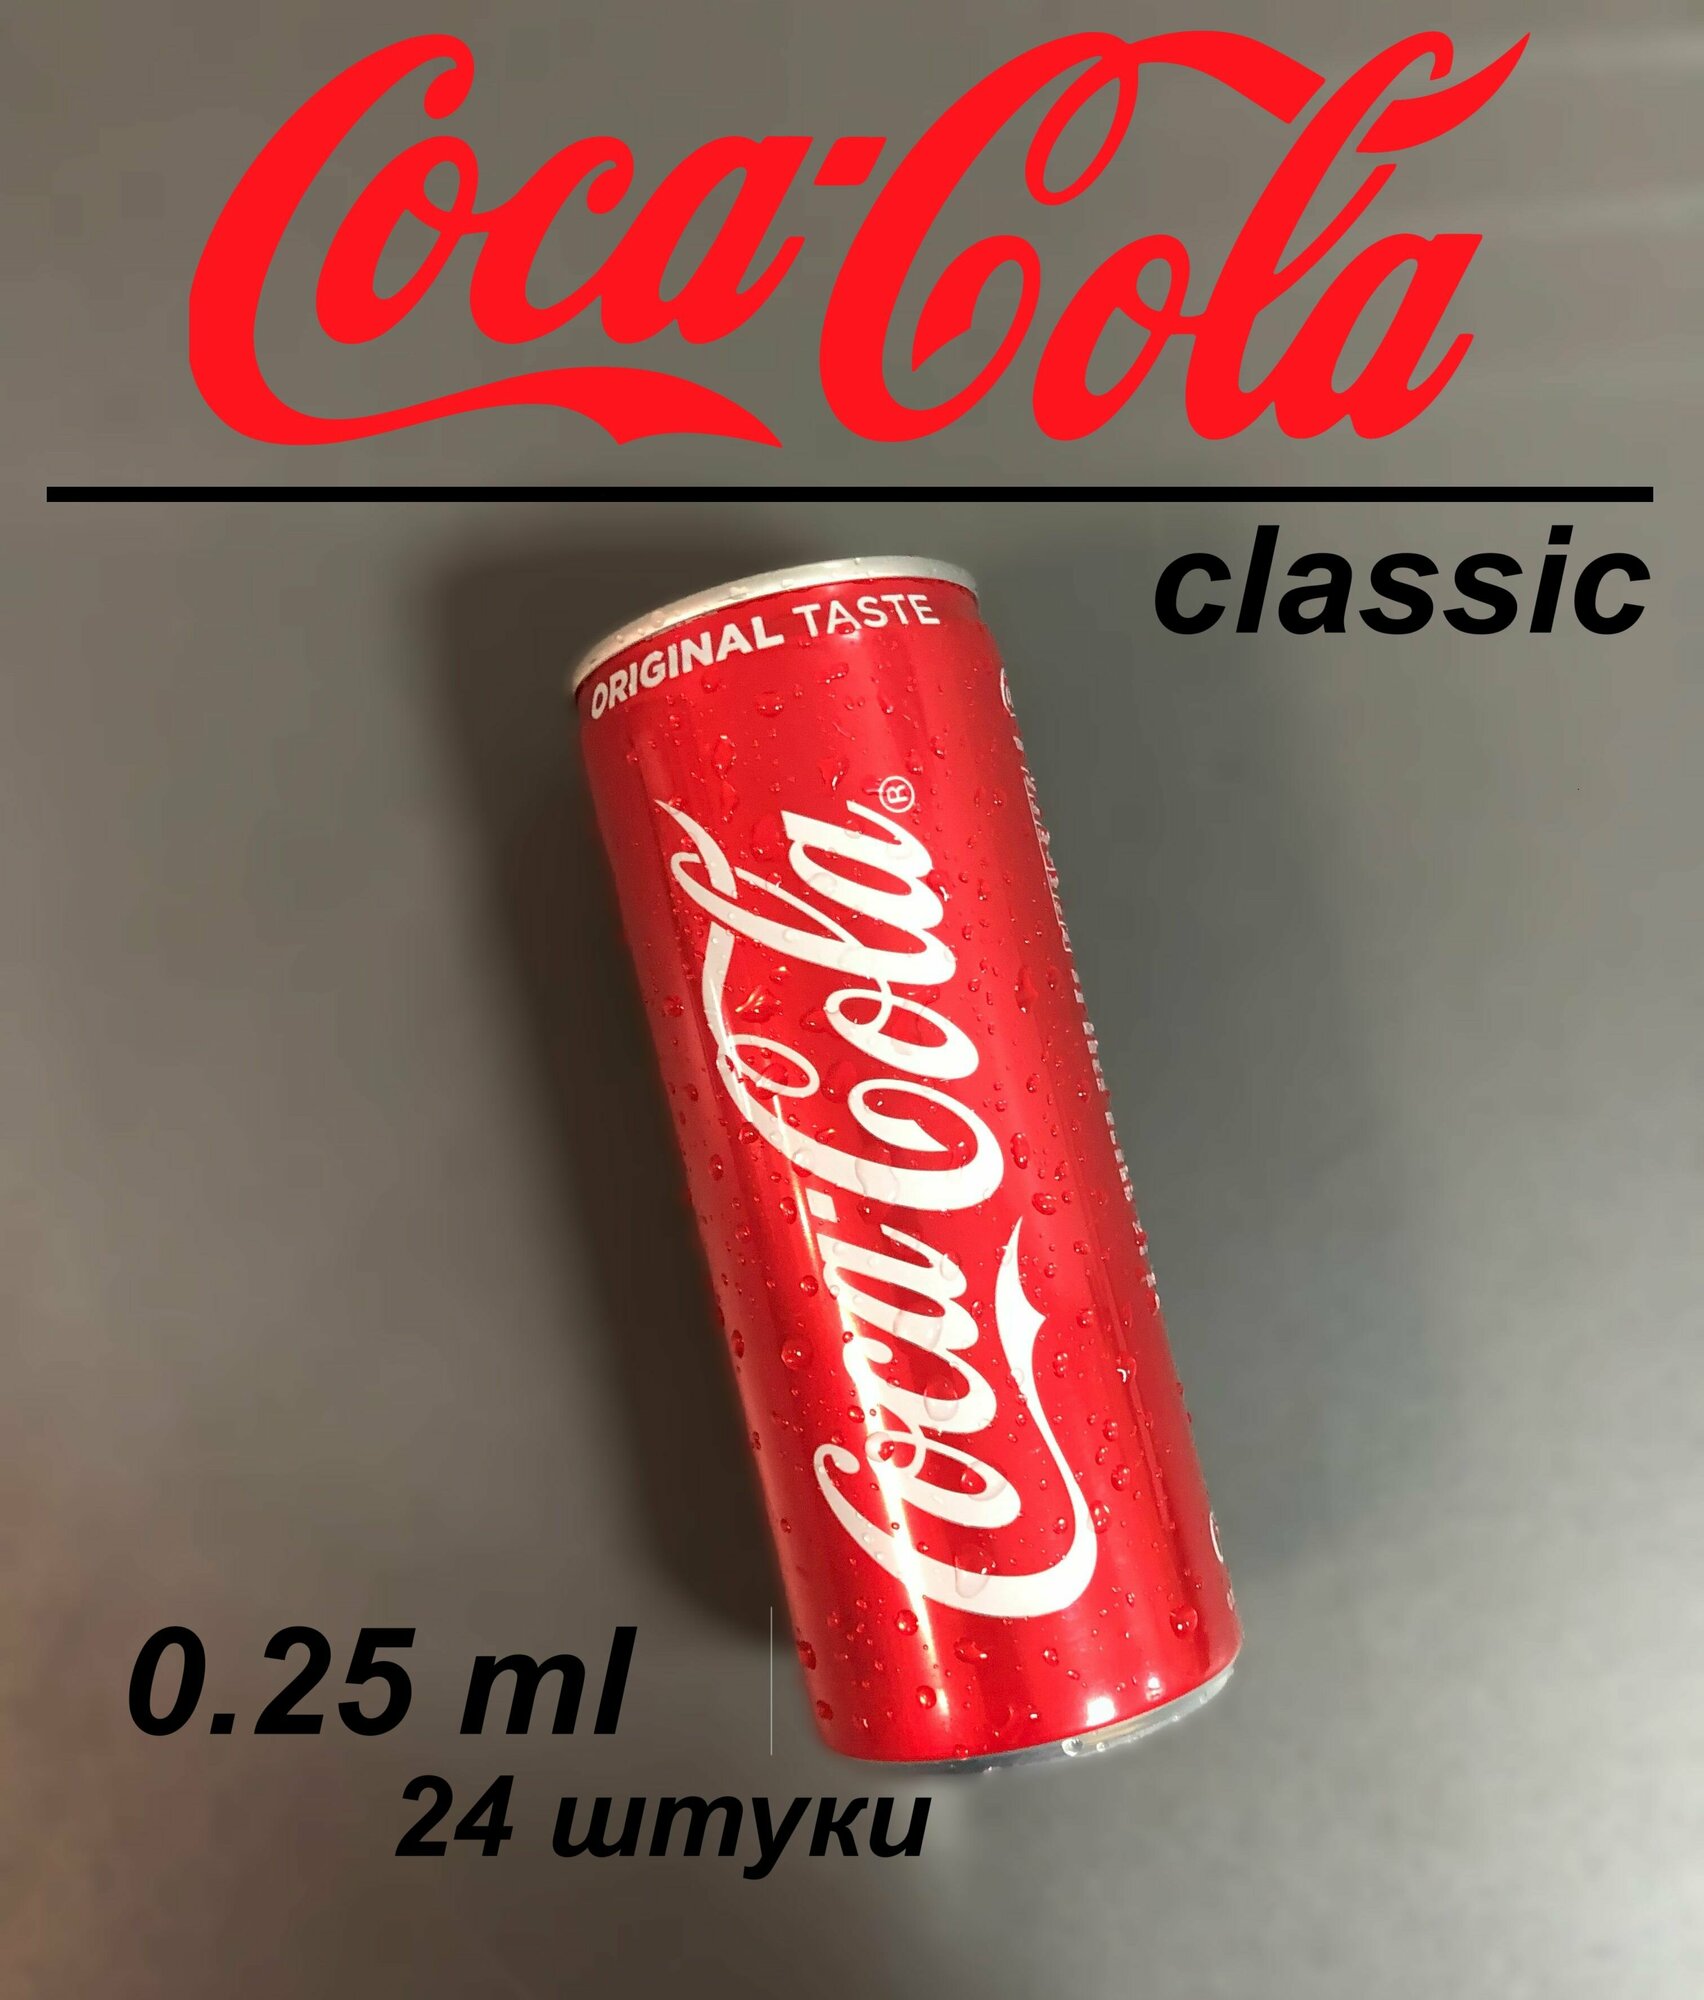 COCA-COLA Afganistan (Кока-Кола Афганистан) Classic 0.25 л х 24 банки, Кока-кола 0,25 мл 24 шт.